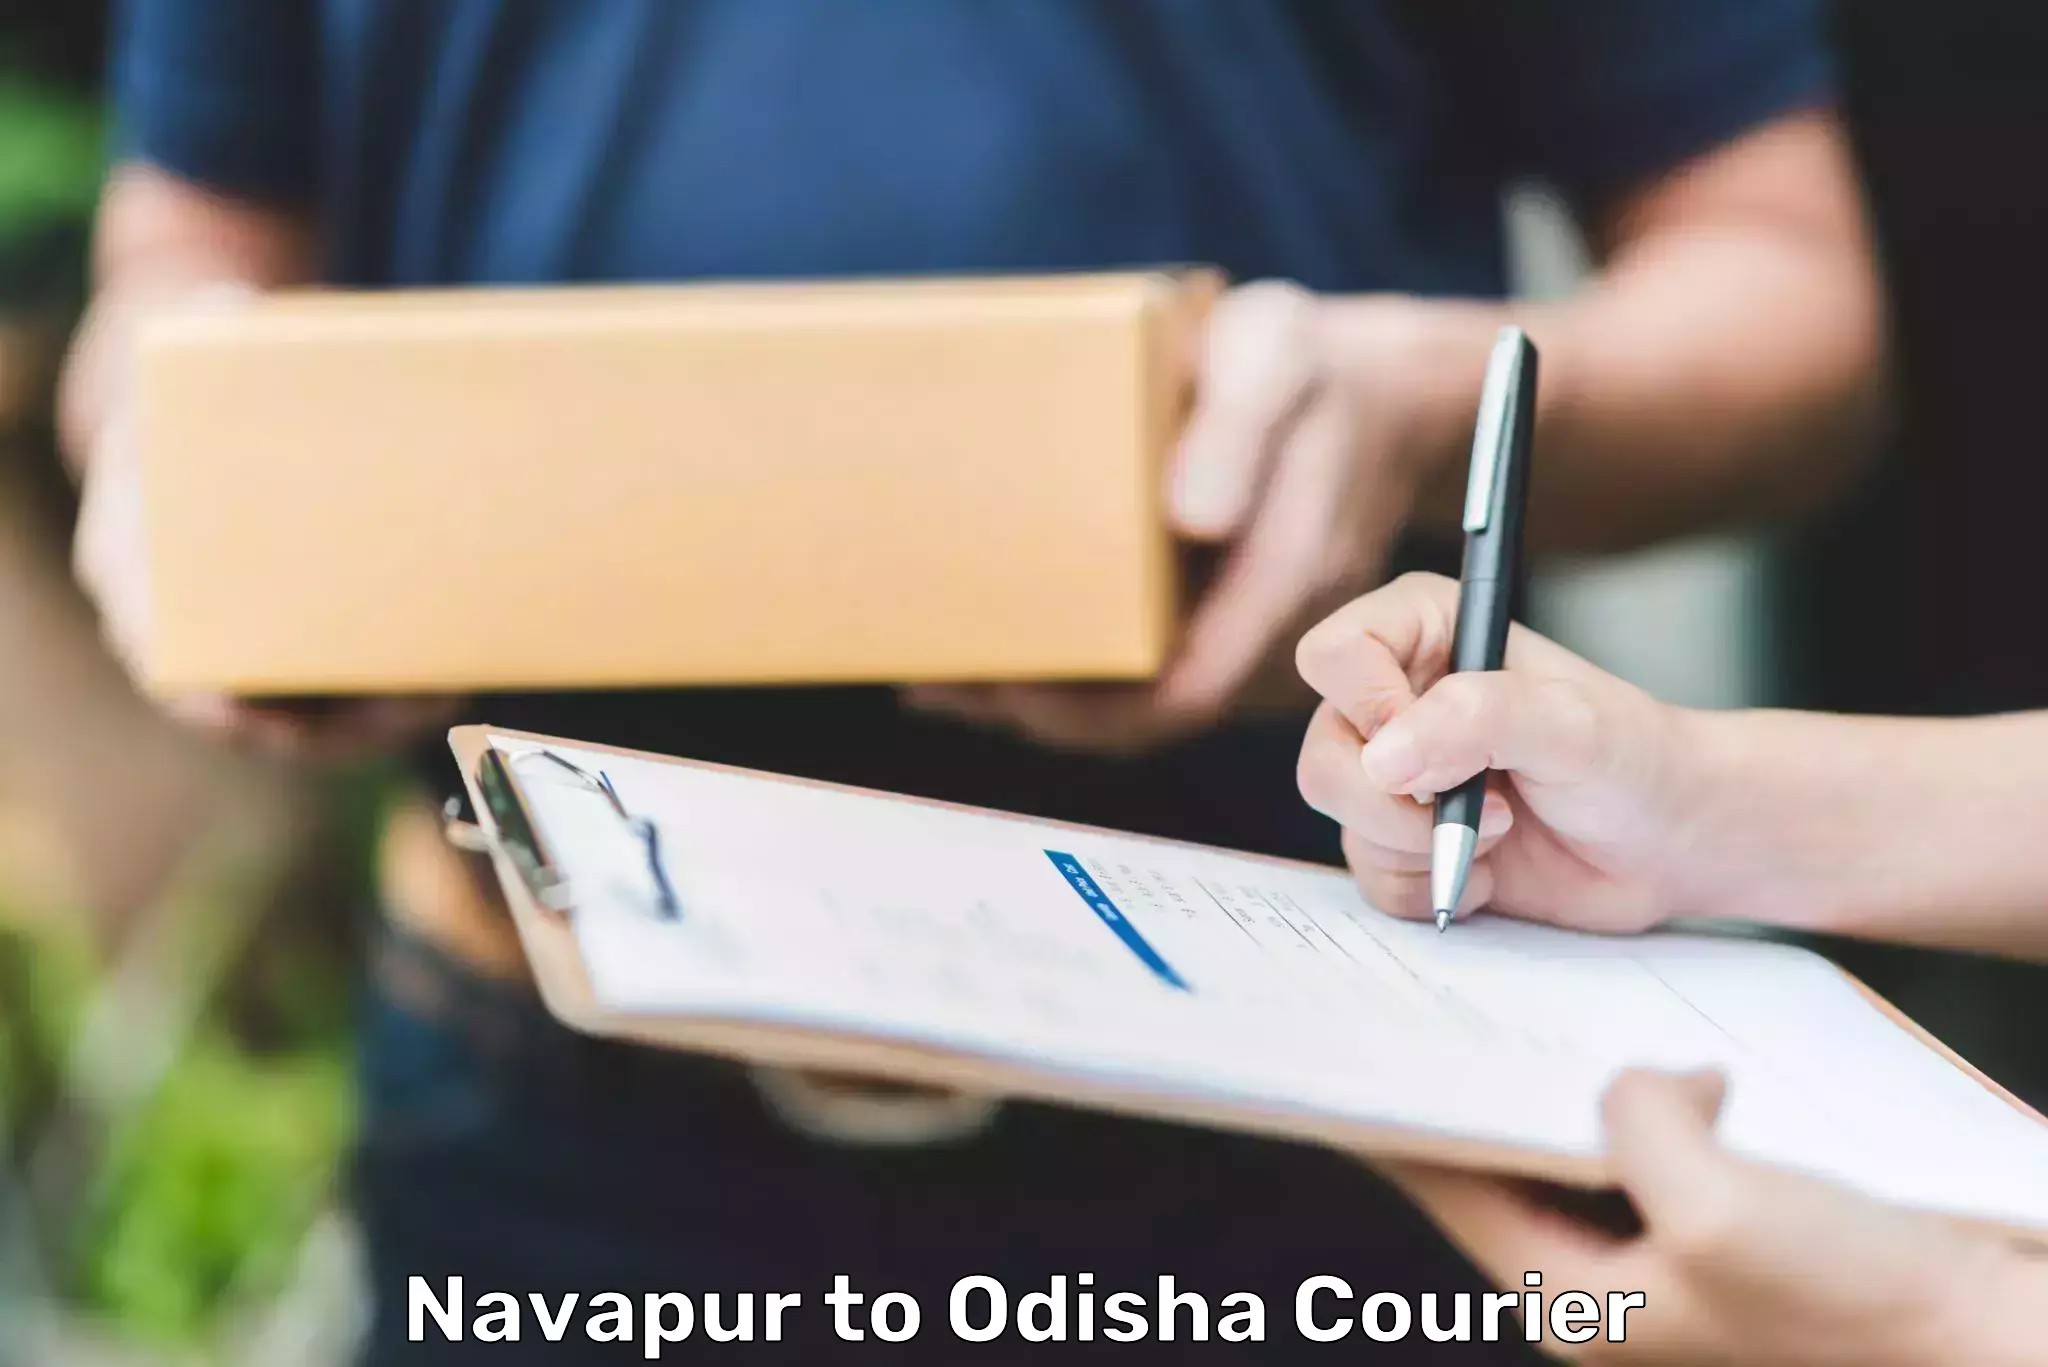 Courier service innovation Navapur to Puri